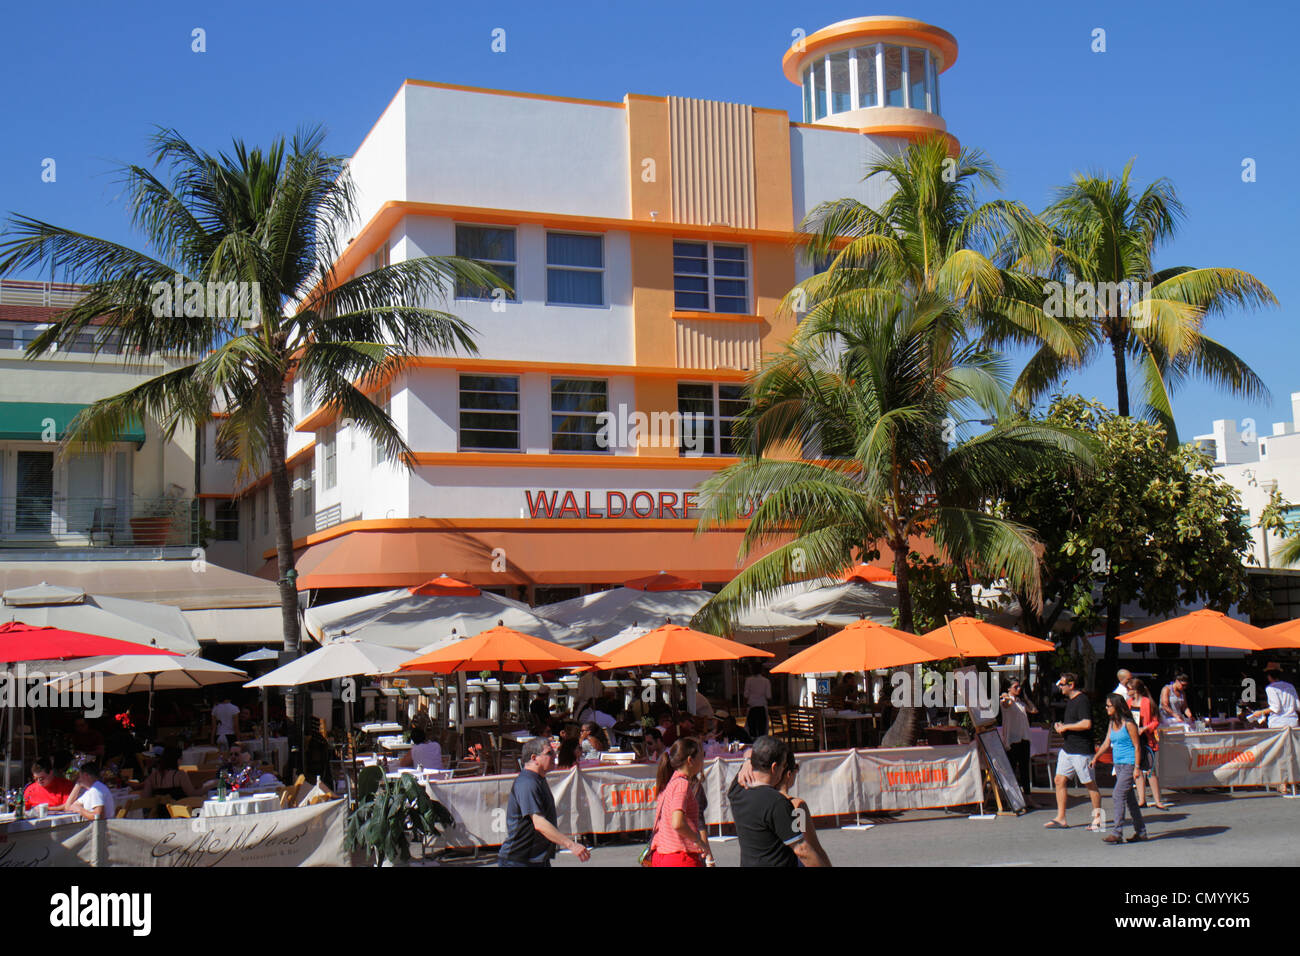 Miami Beach Florida,Ocean Drive,Art Deco Historic District,Waldorf Towers,hotel,al fresco sidewalk outside tables,dining,umbrellas,palm trees,restaura Stock Photo